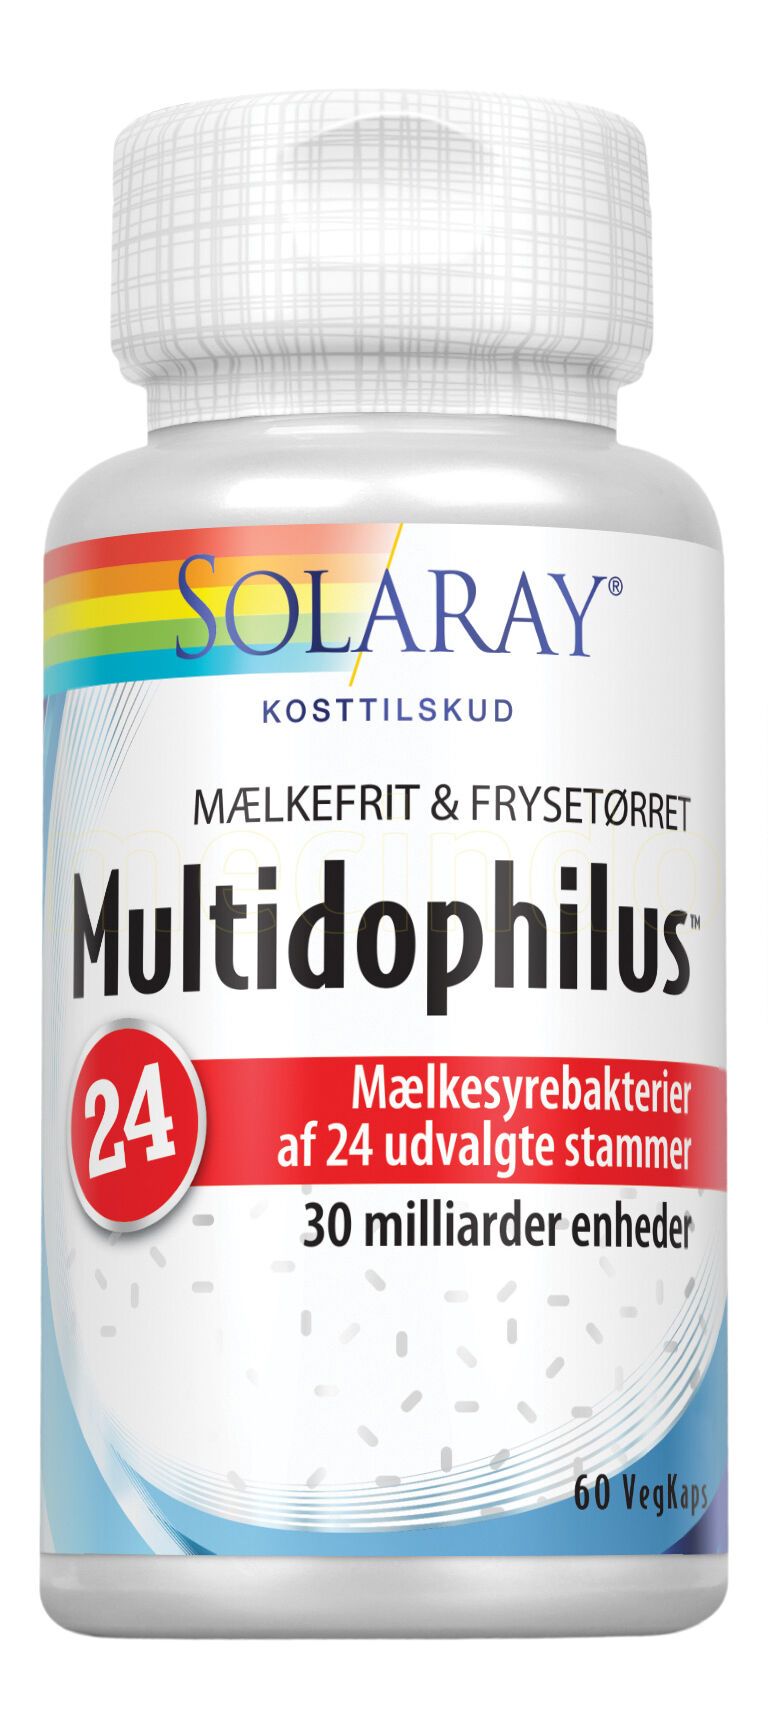 Solaray Multidophilus 24 - 60 Kapsler